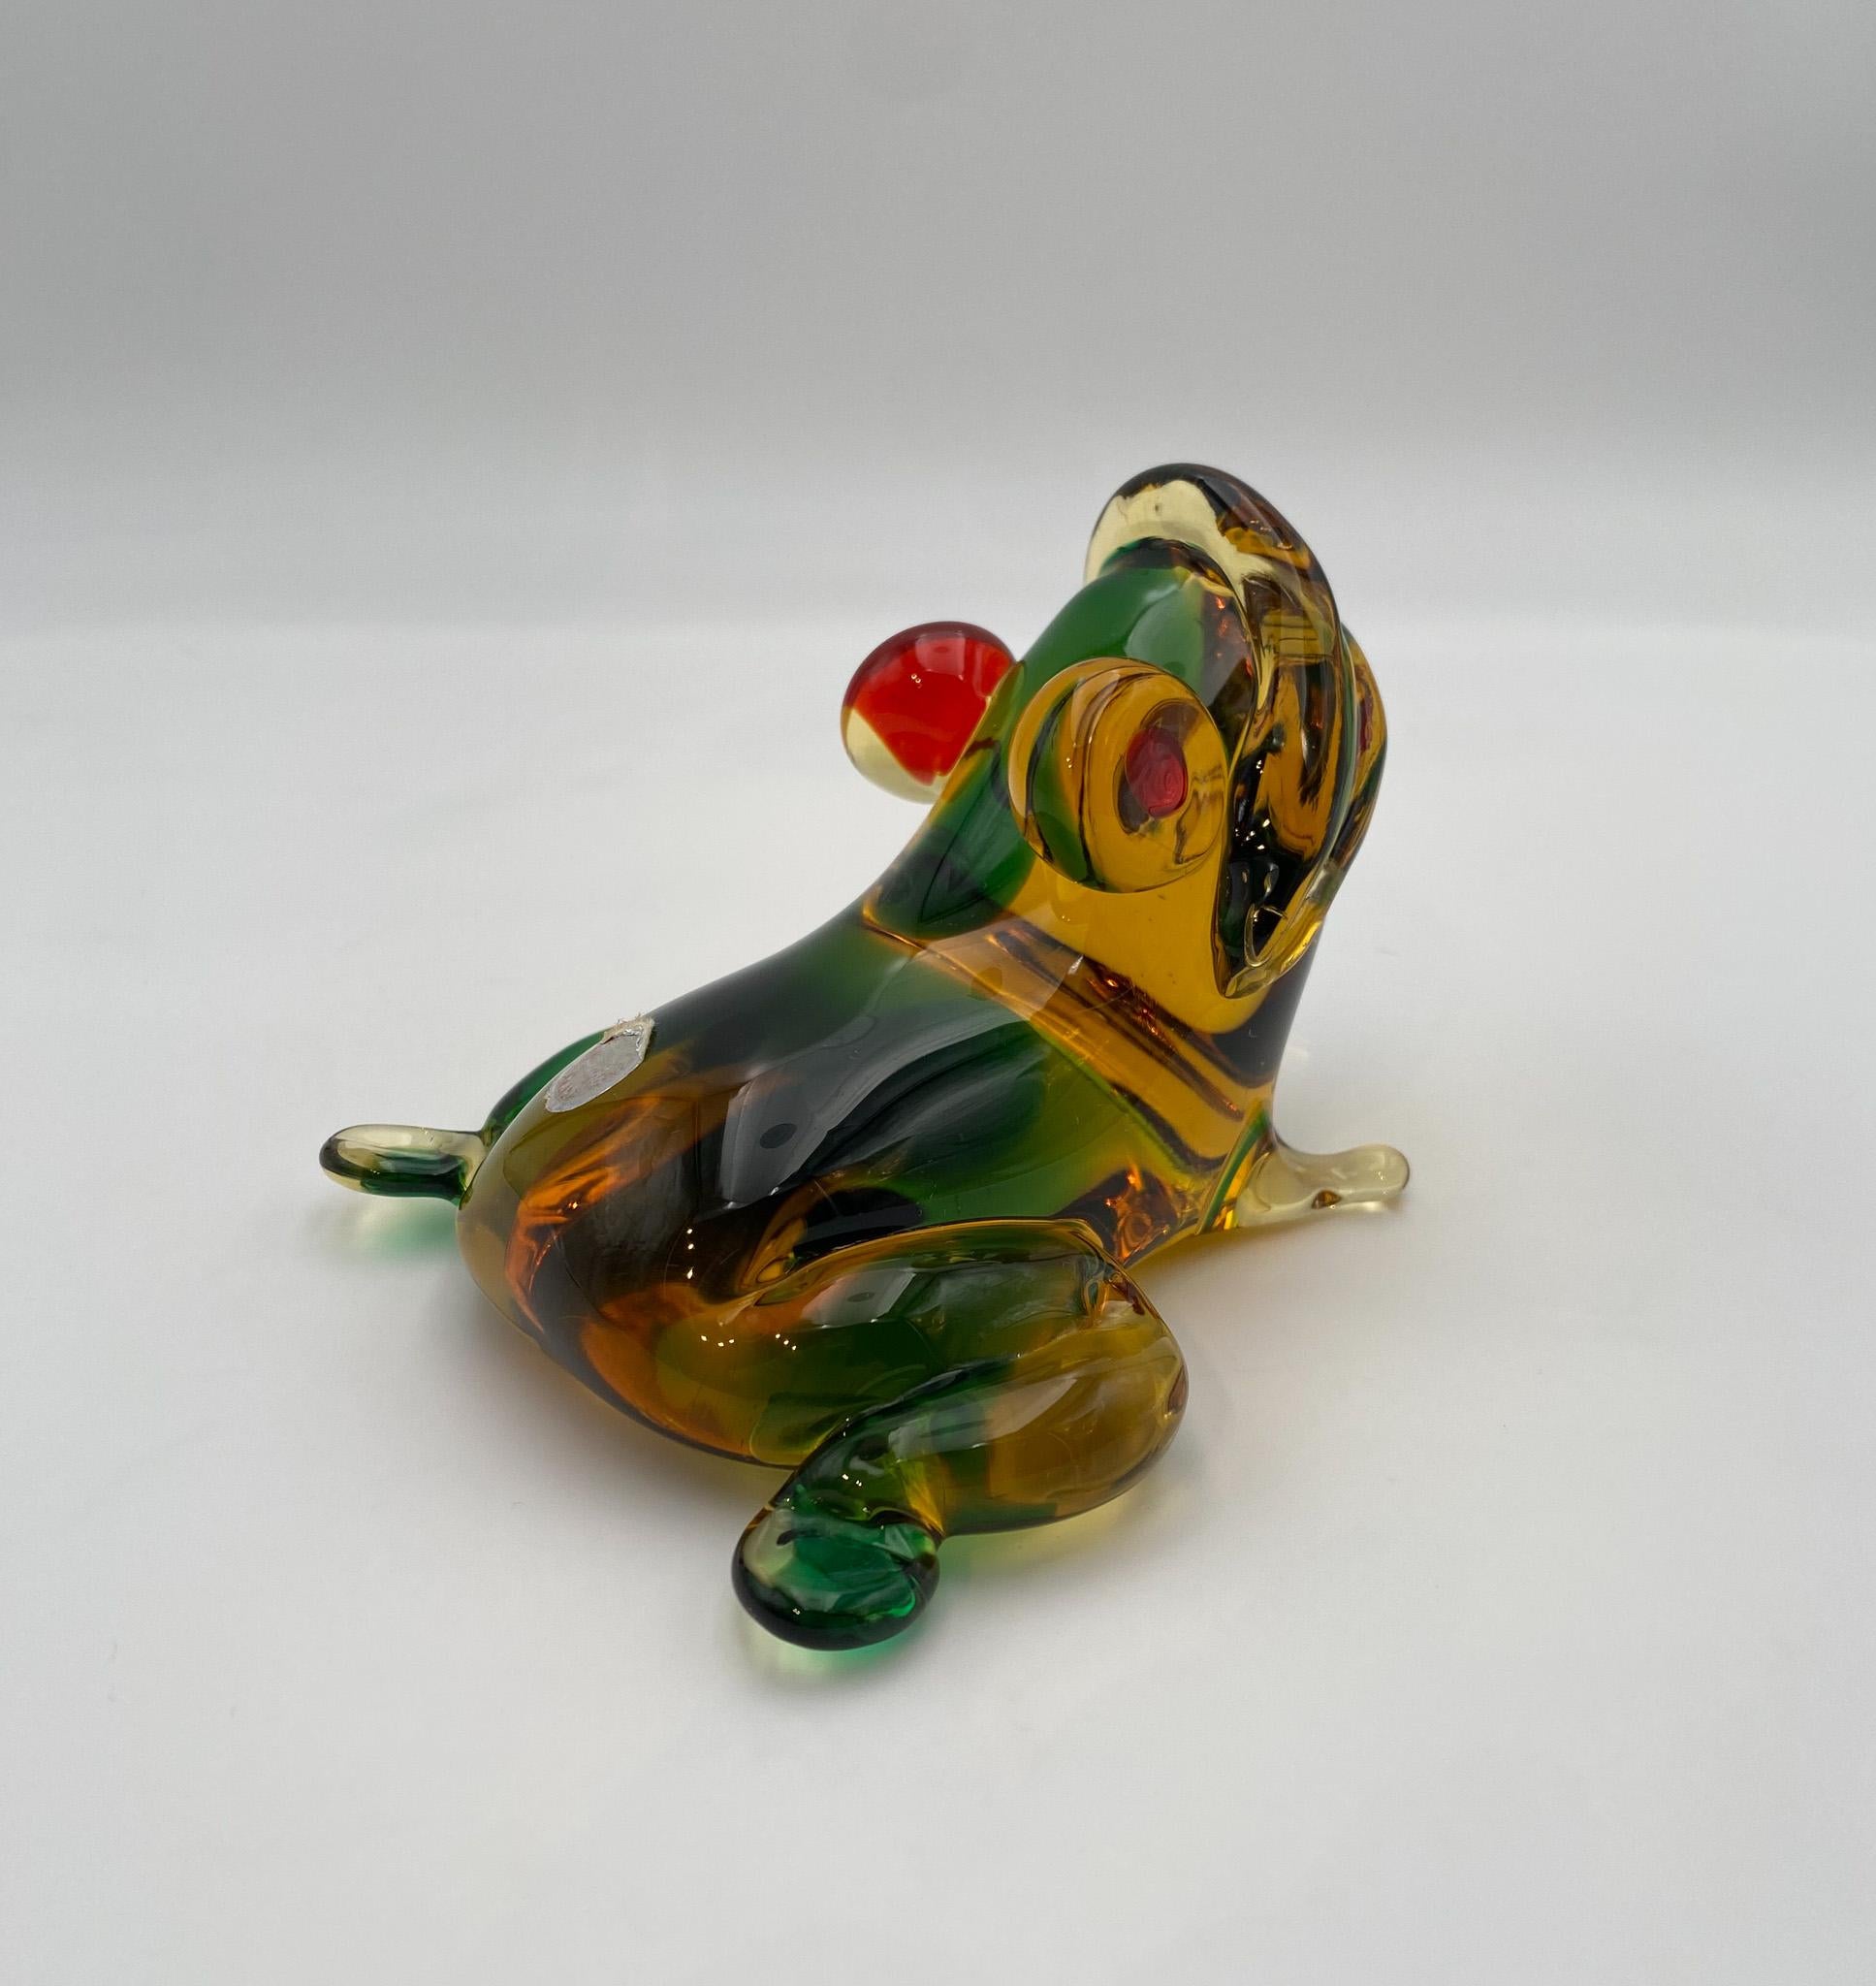 Murano Hand Blown Art Glass Frog Sculpture, Italy, 1950's.  Retains the original silver Murano label.  

